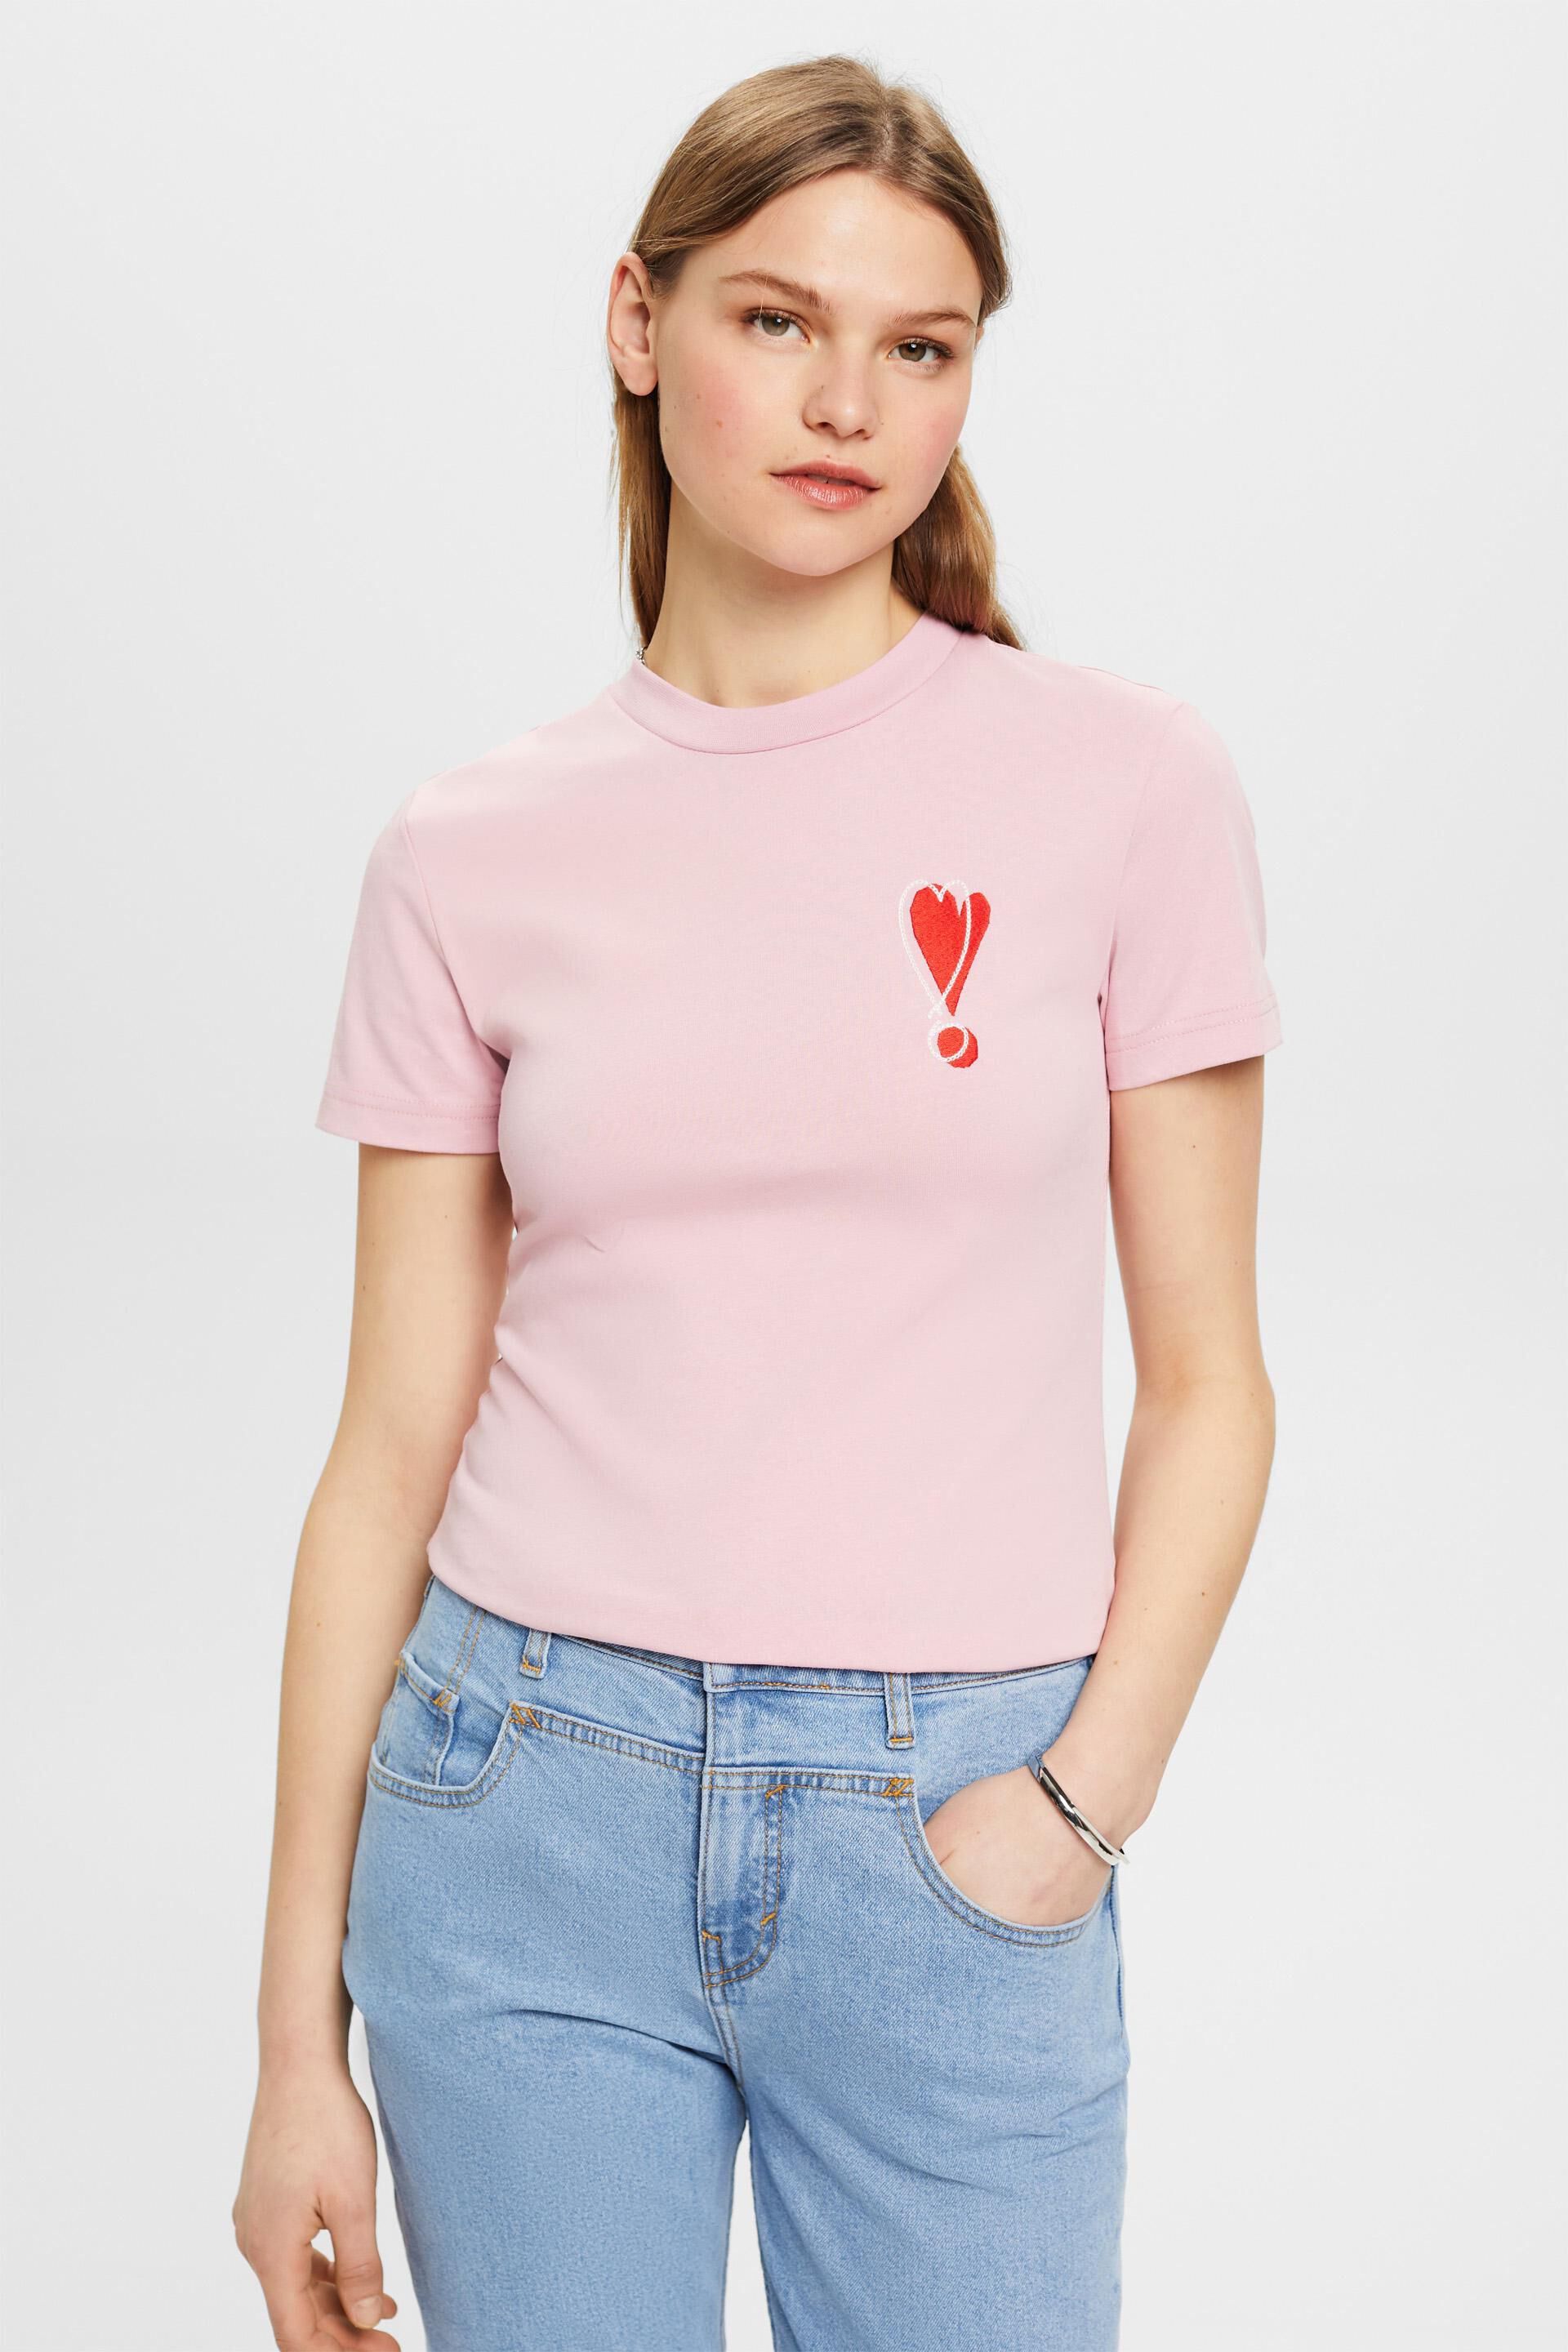 Esprit Damen Cotton T-shirt with embroidered heart motif